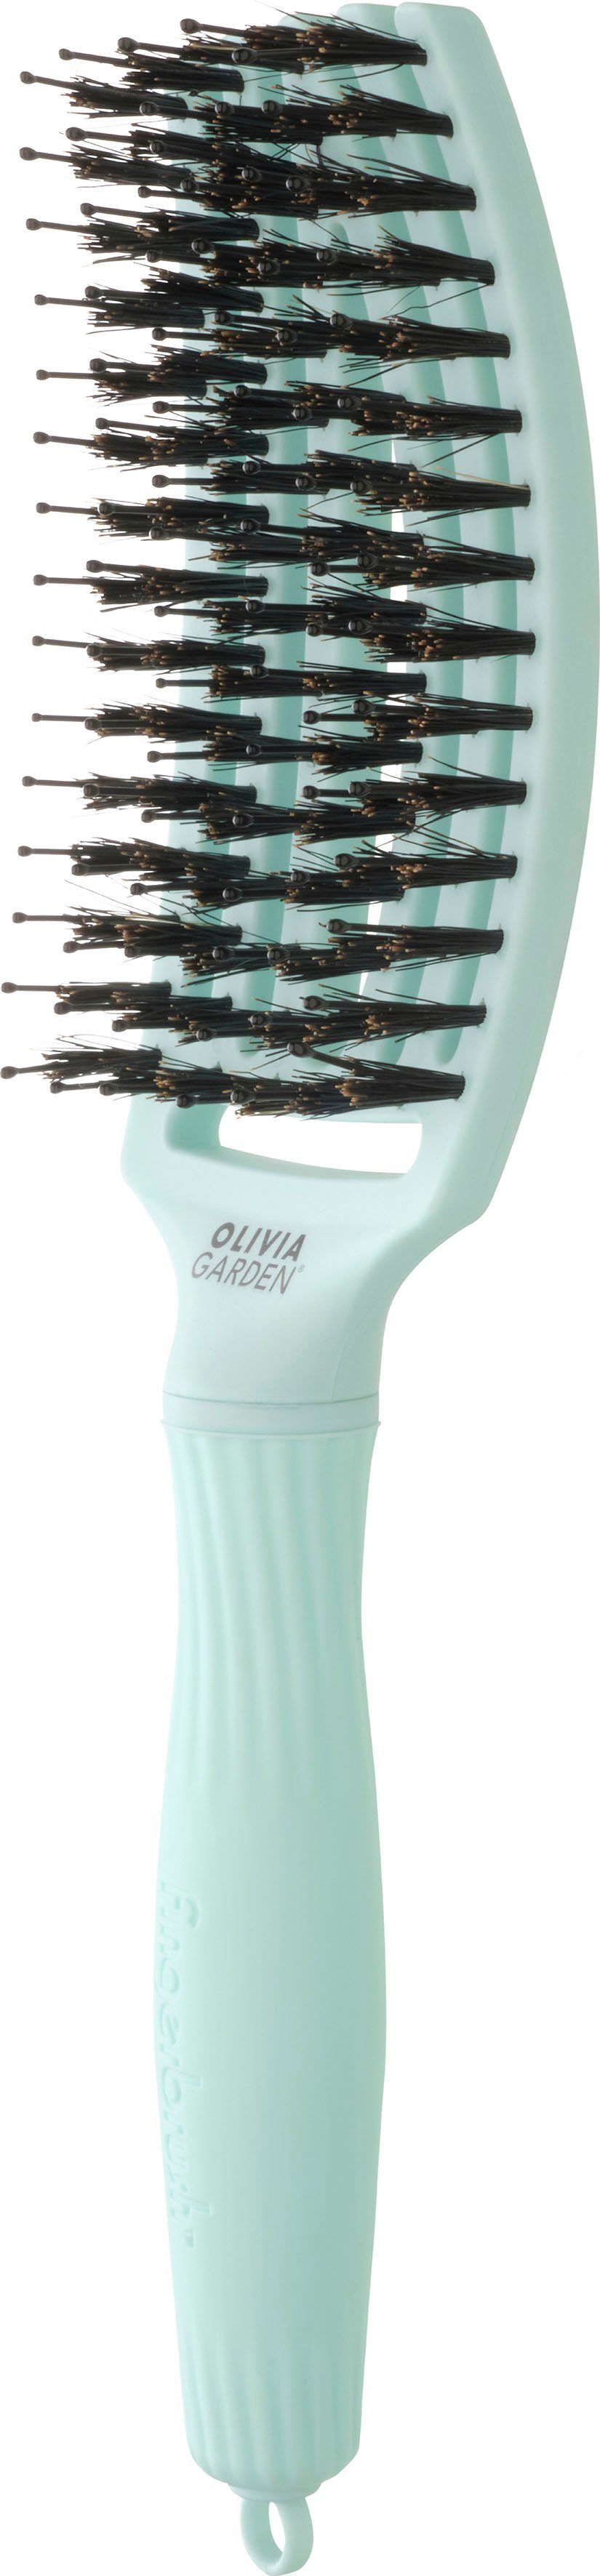 OLIVIA GARDEN Haarbürste Combo Fingerbrush Medium mint